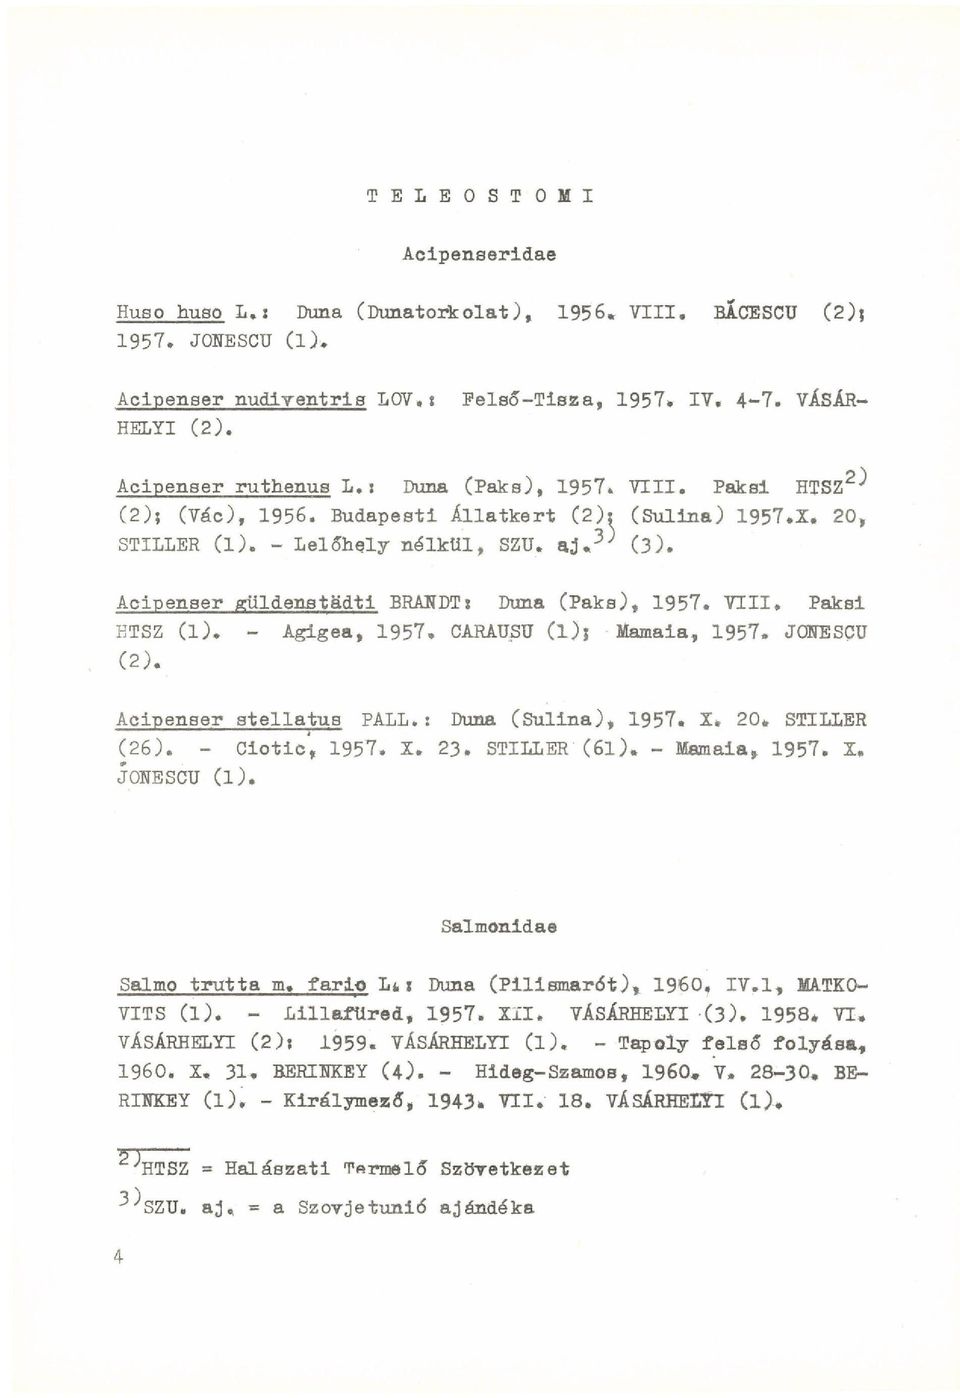 Acipenser güldenstädti BRANDT: Duna (Paks), 1957. VIII» Paksi HTSZ (1). - Agigea, 1957» CARAUSU ( l ) Mamaia, 1957» J0NESÇU (2). Acipenser stellatus PALL.: Duna (Sulina), 1957. X» 20* STILLER (26).